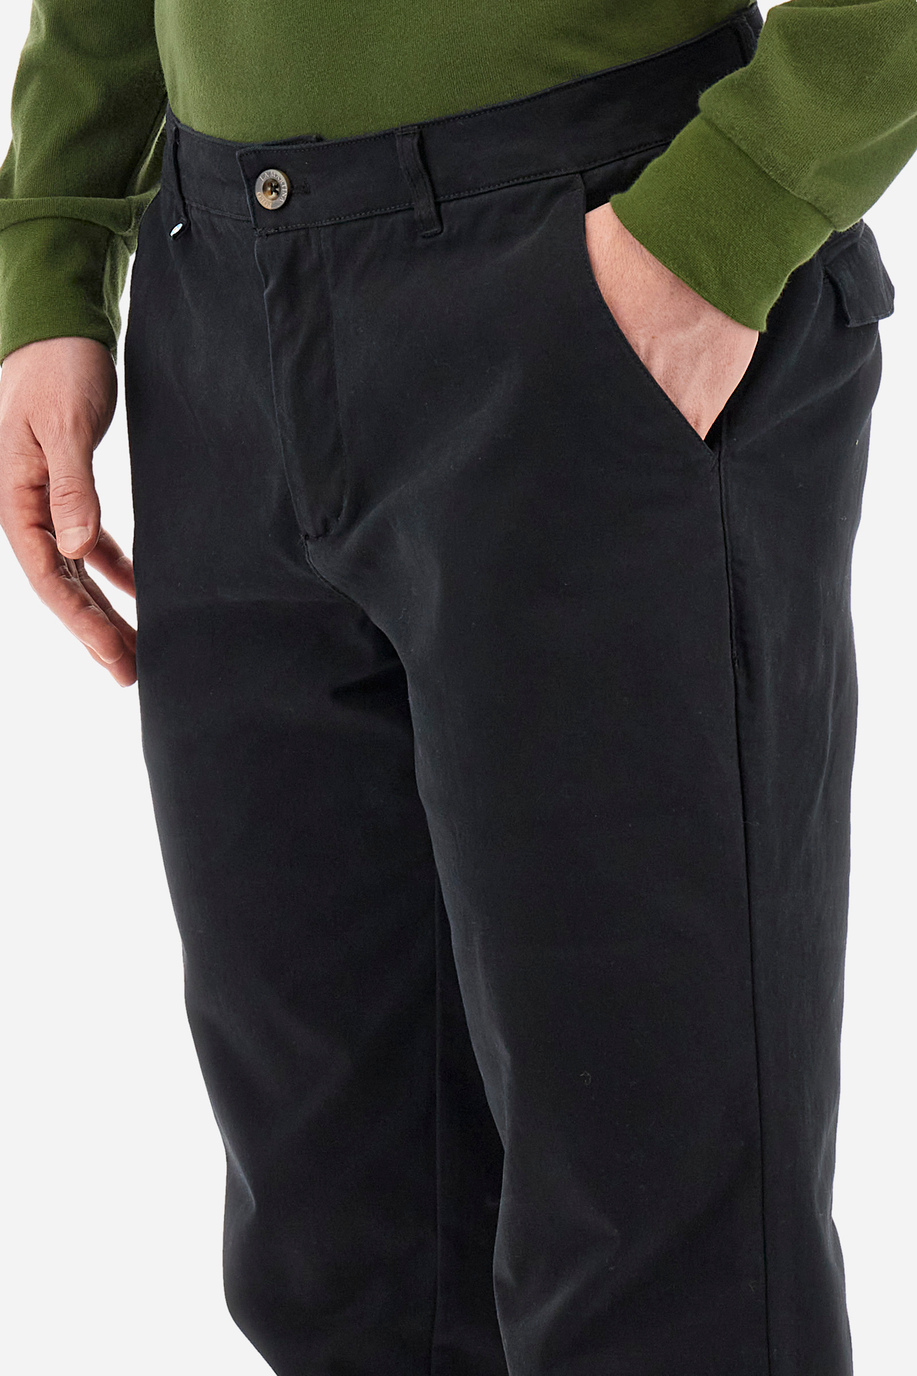 Pantalon chino coupe slim - Siard - Pantalons | La Martina - Official Online Shop